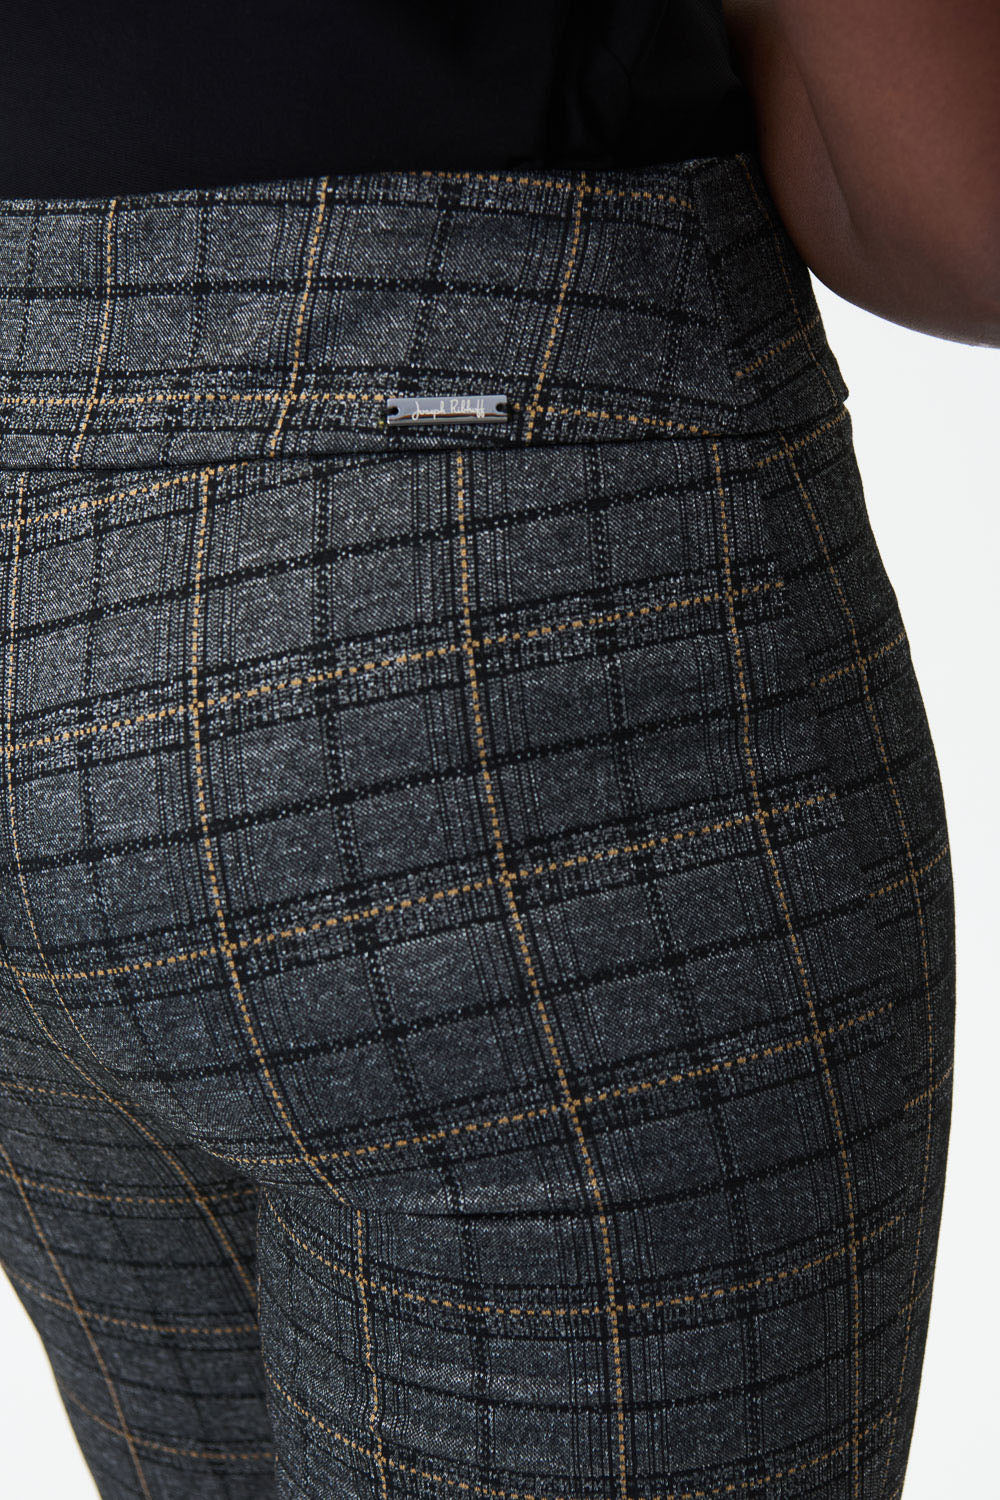 Joseph Ribkoff Grey-Multi Jacquard Knit Pants Style 224091